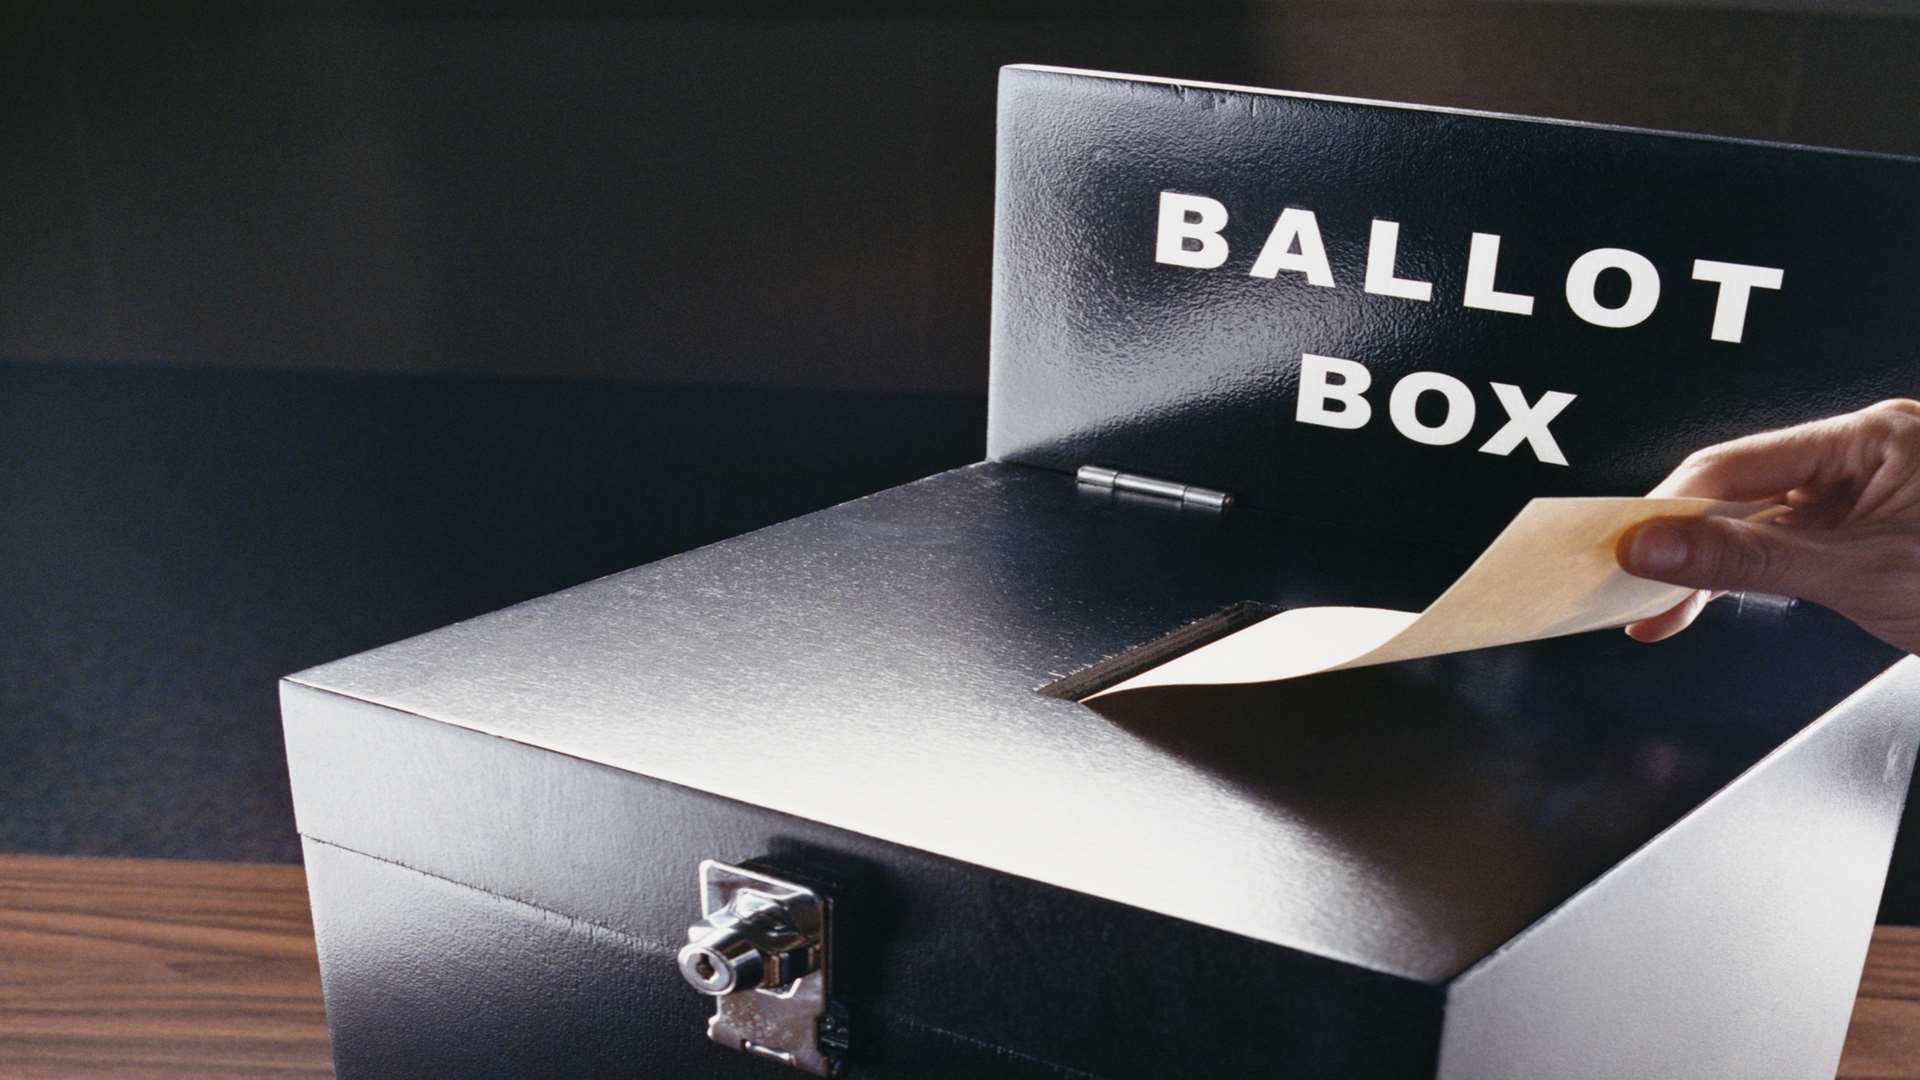 The Ballot Box, stock image.